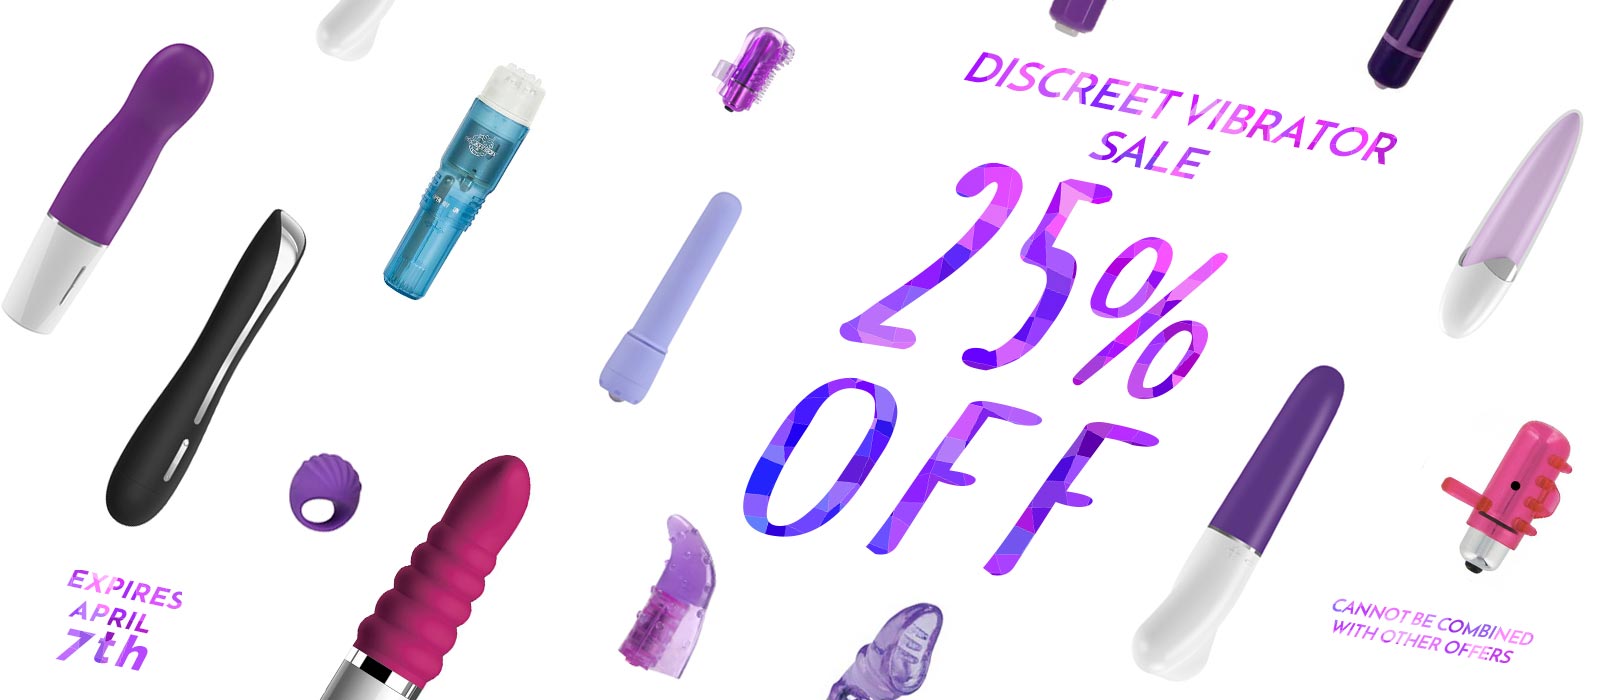 25% off discreet vibrator sale